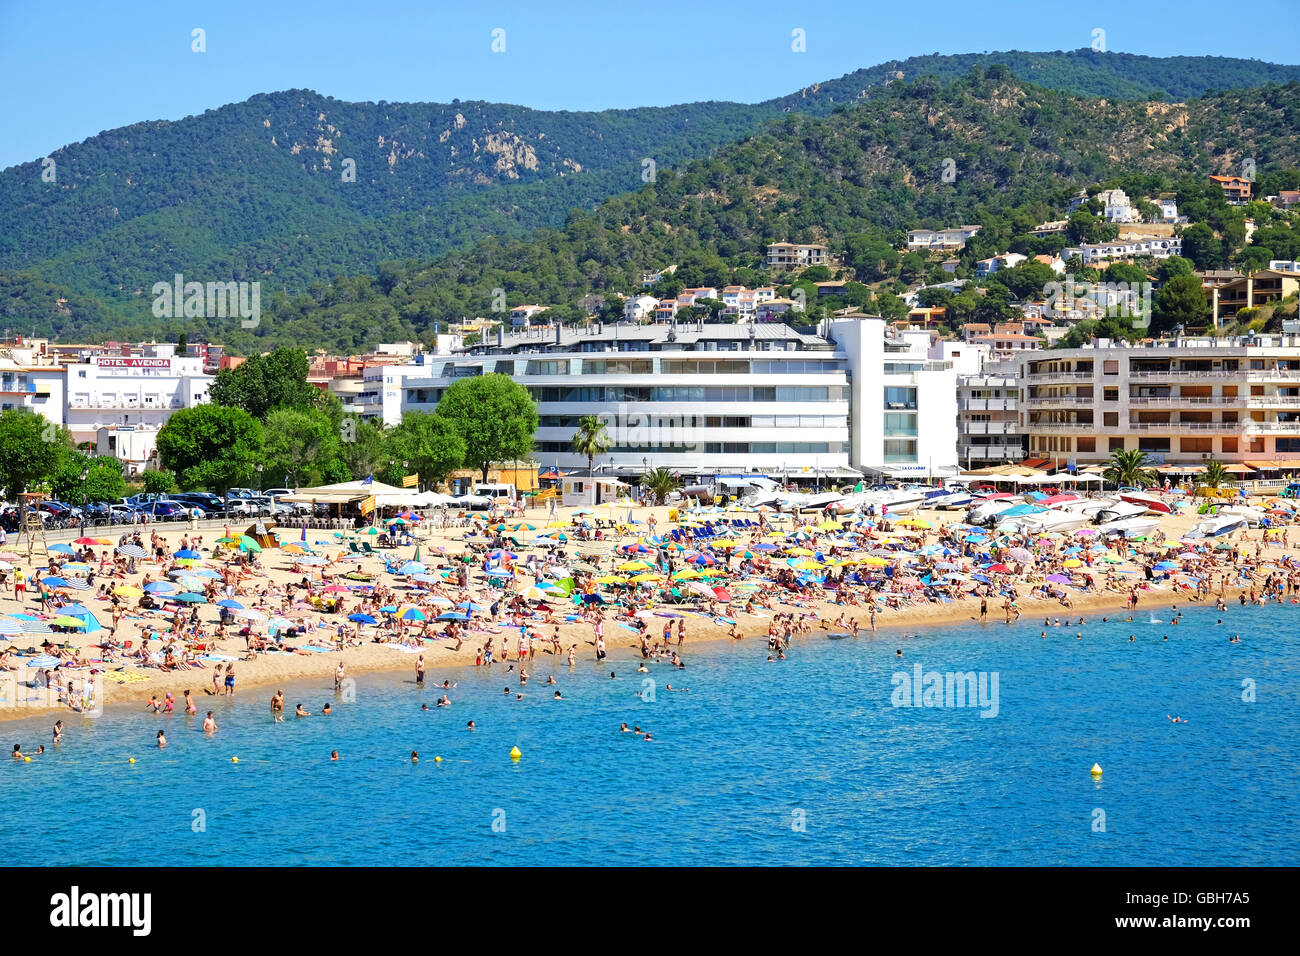 The beach at Tossa de mar on the Costa Brava in Spain Stock Photo